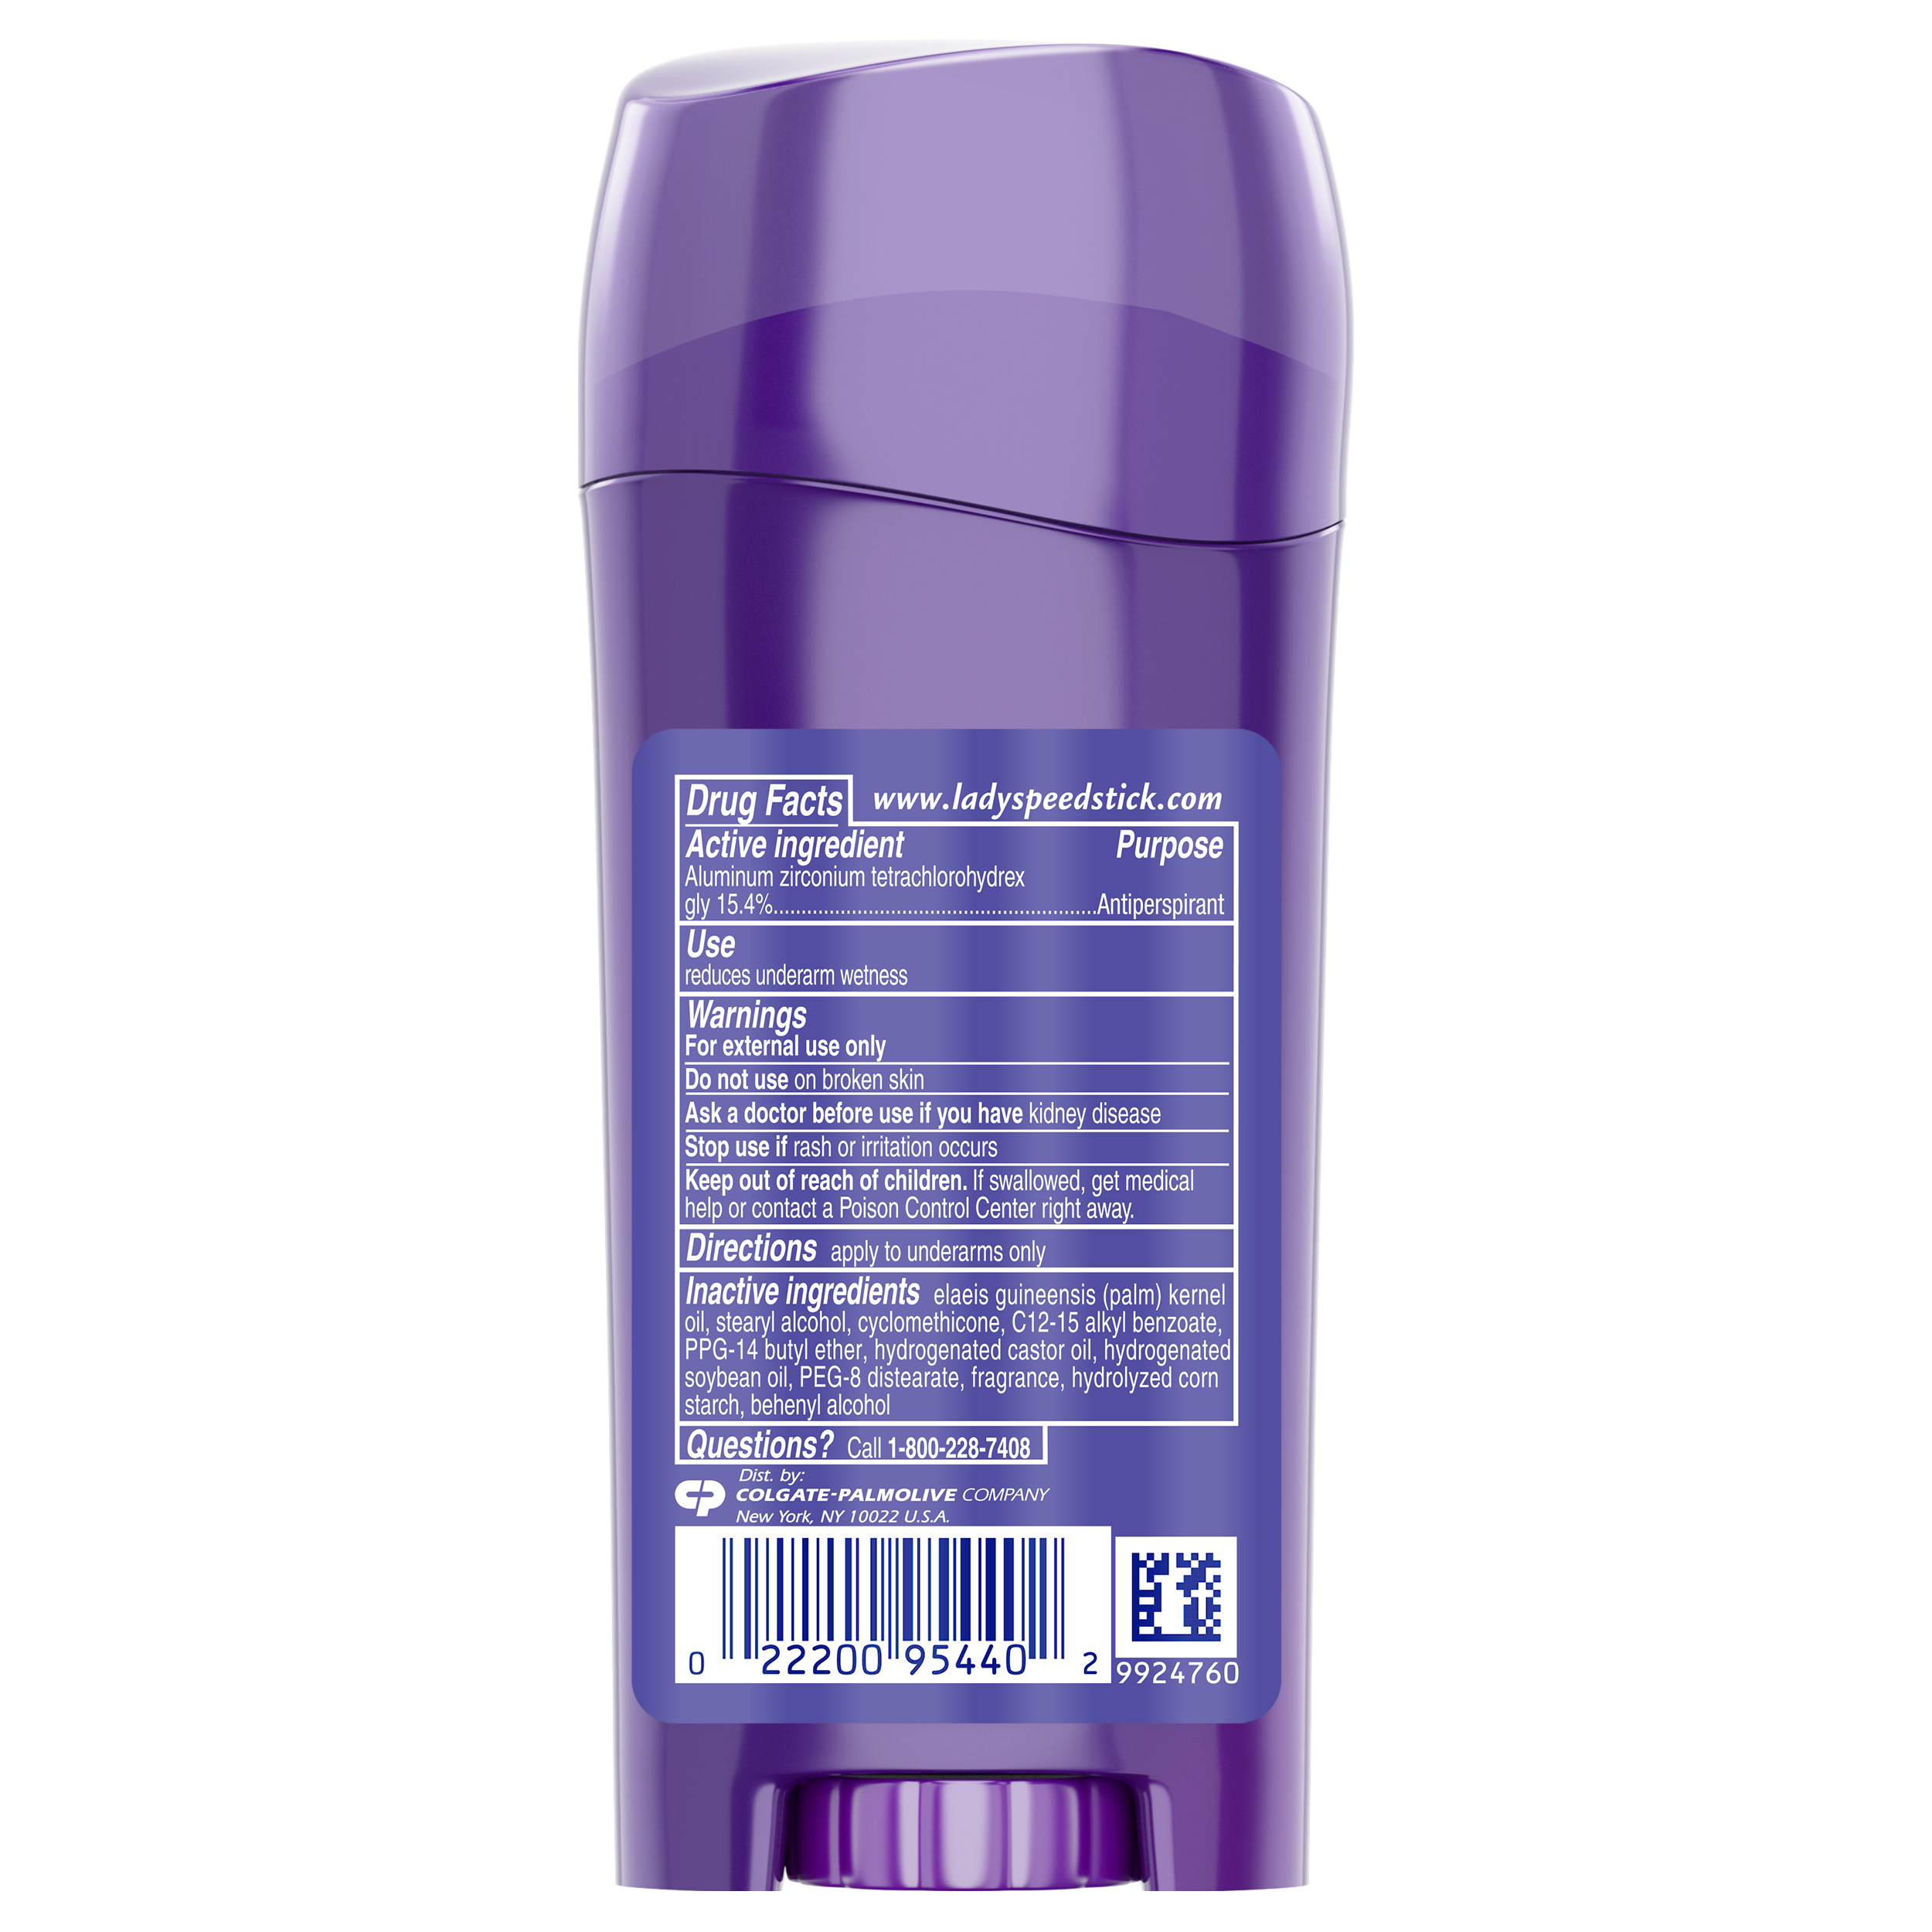 Lady Speed Stick Antiperspirant Deodorant Invisible Dry Powder Fresh, 2.30 oz - image 3 of 4